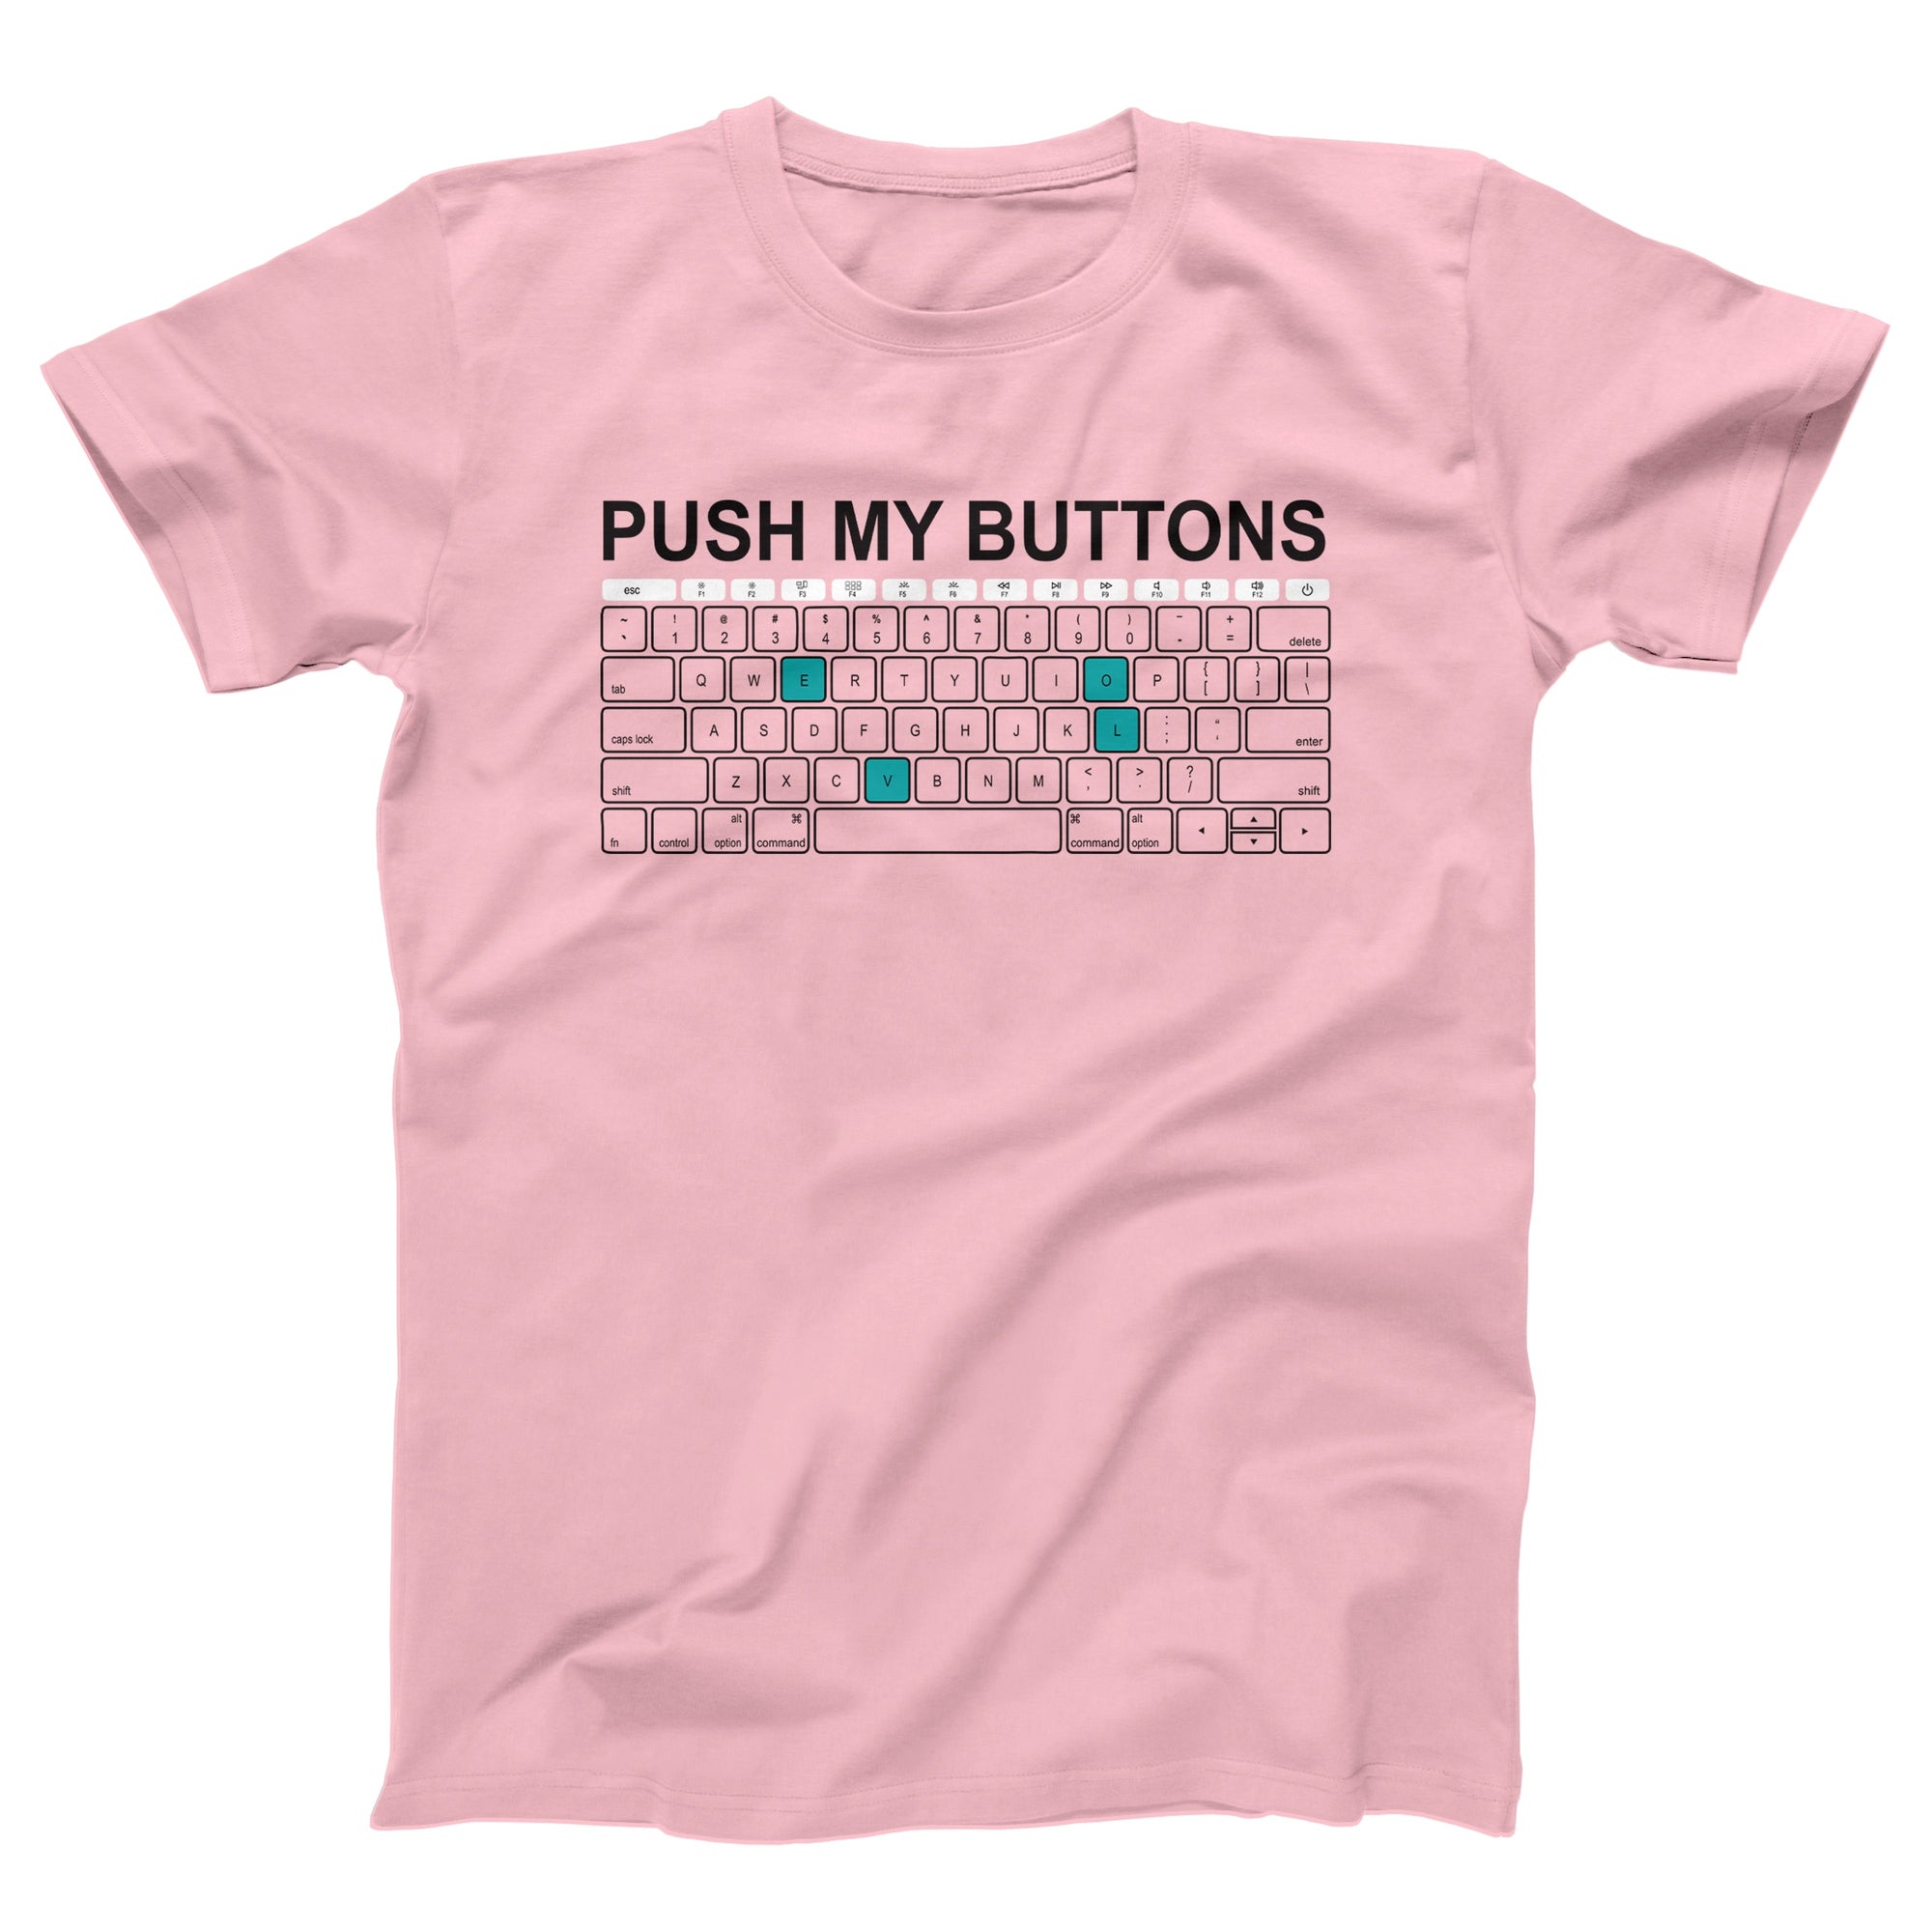 Push My Buttons Adult Unisex T-Shirt - anishphilip